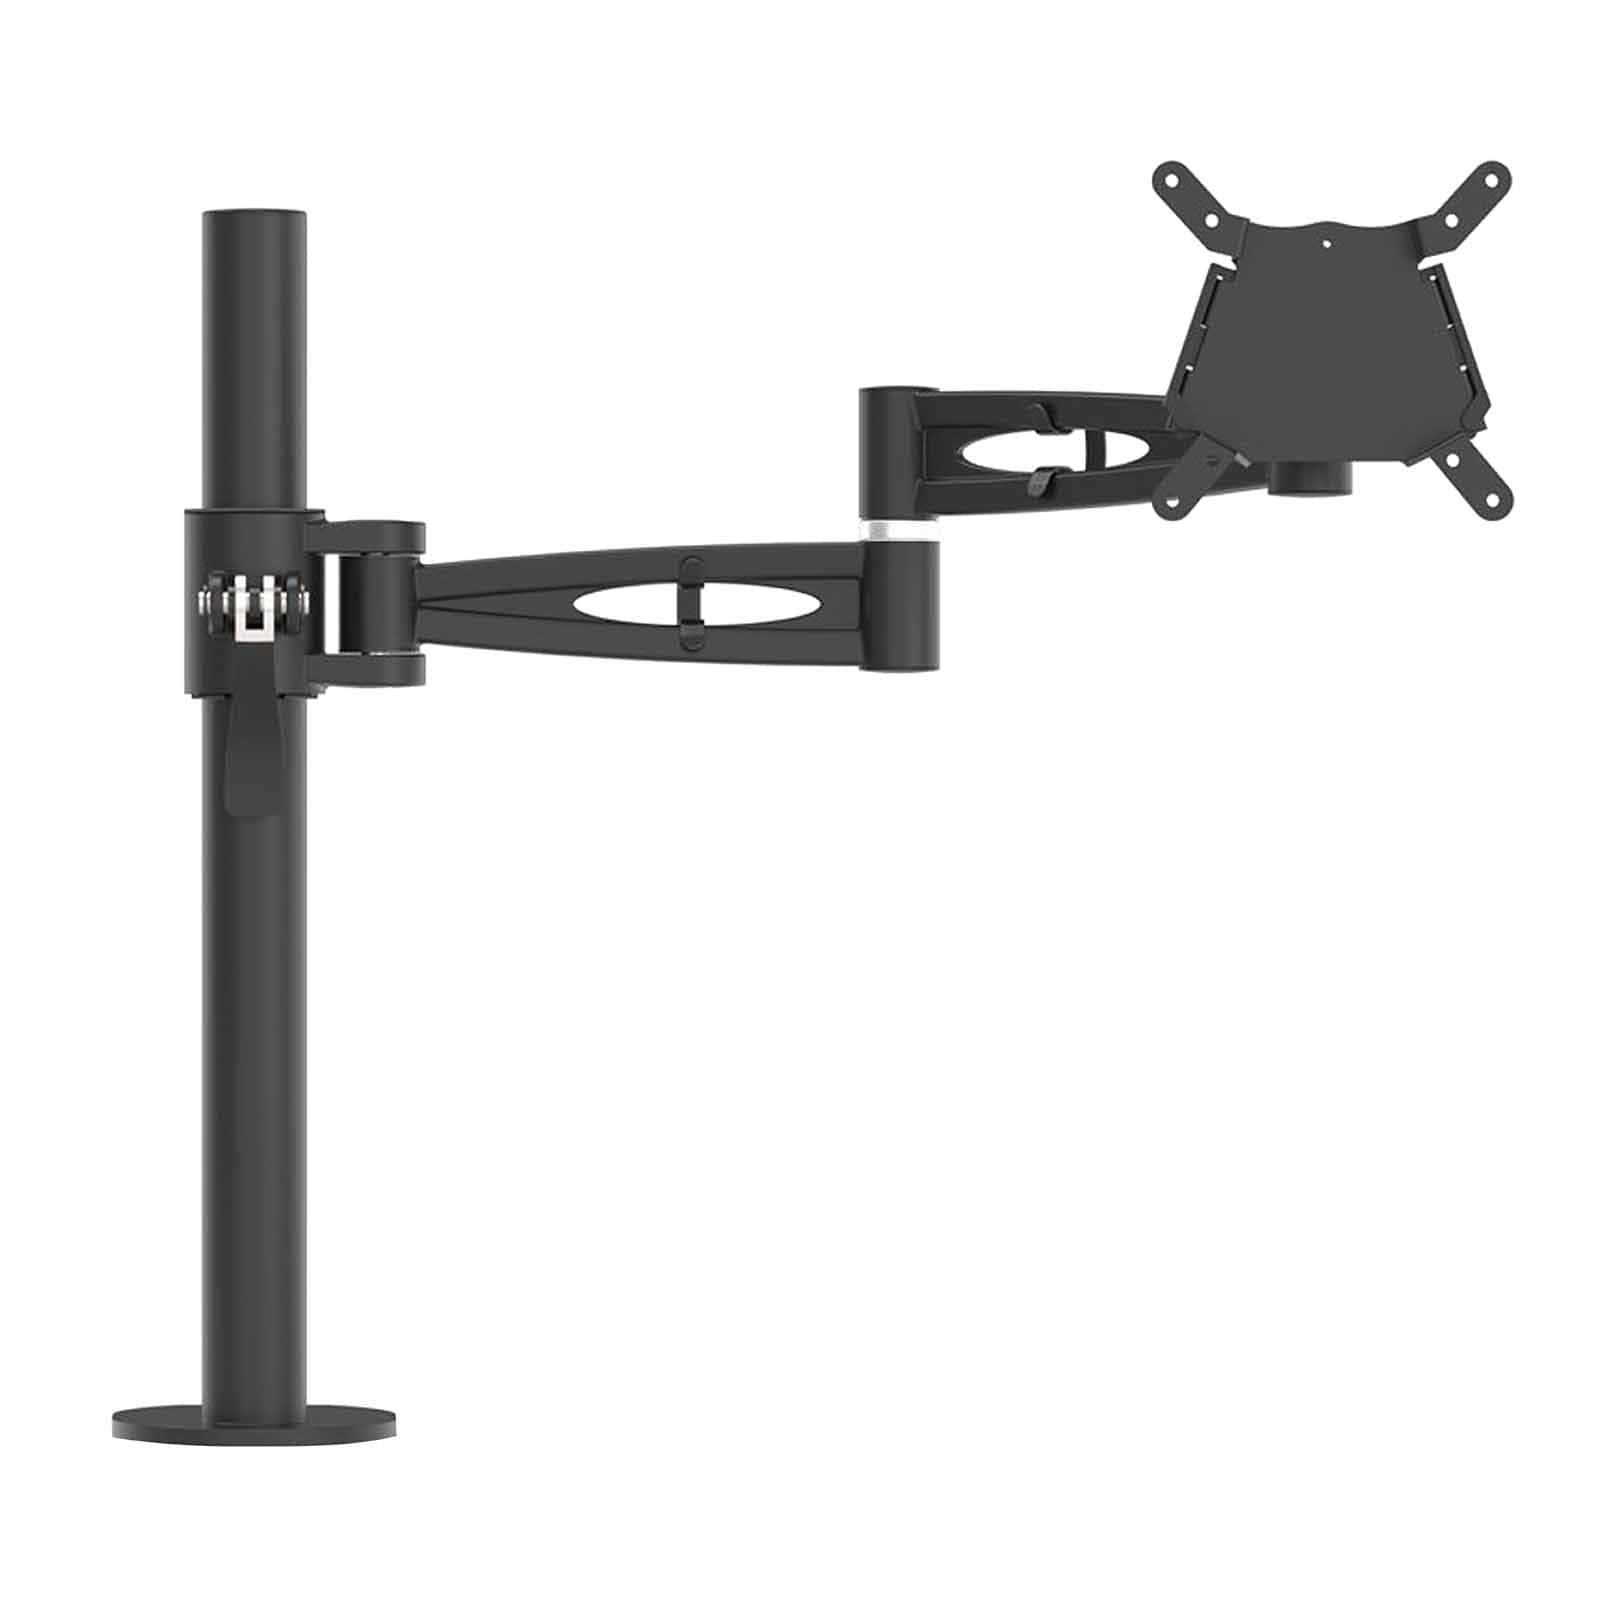 Desk mounted single monitor arm